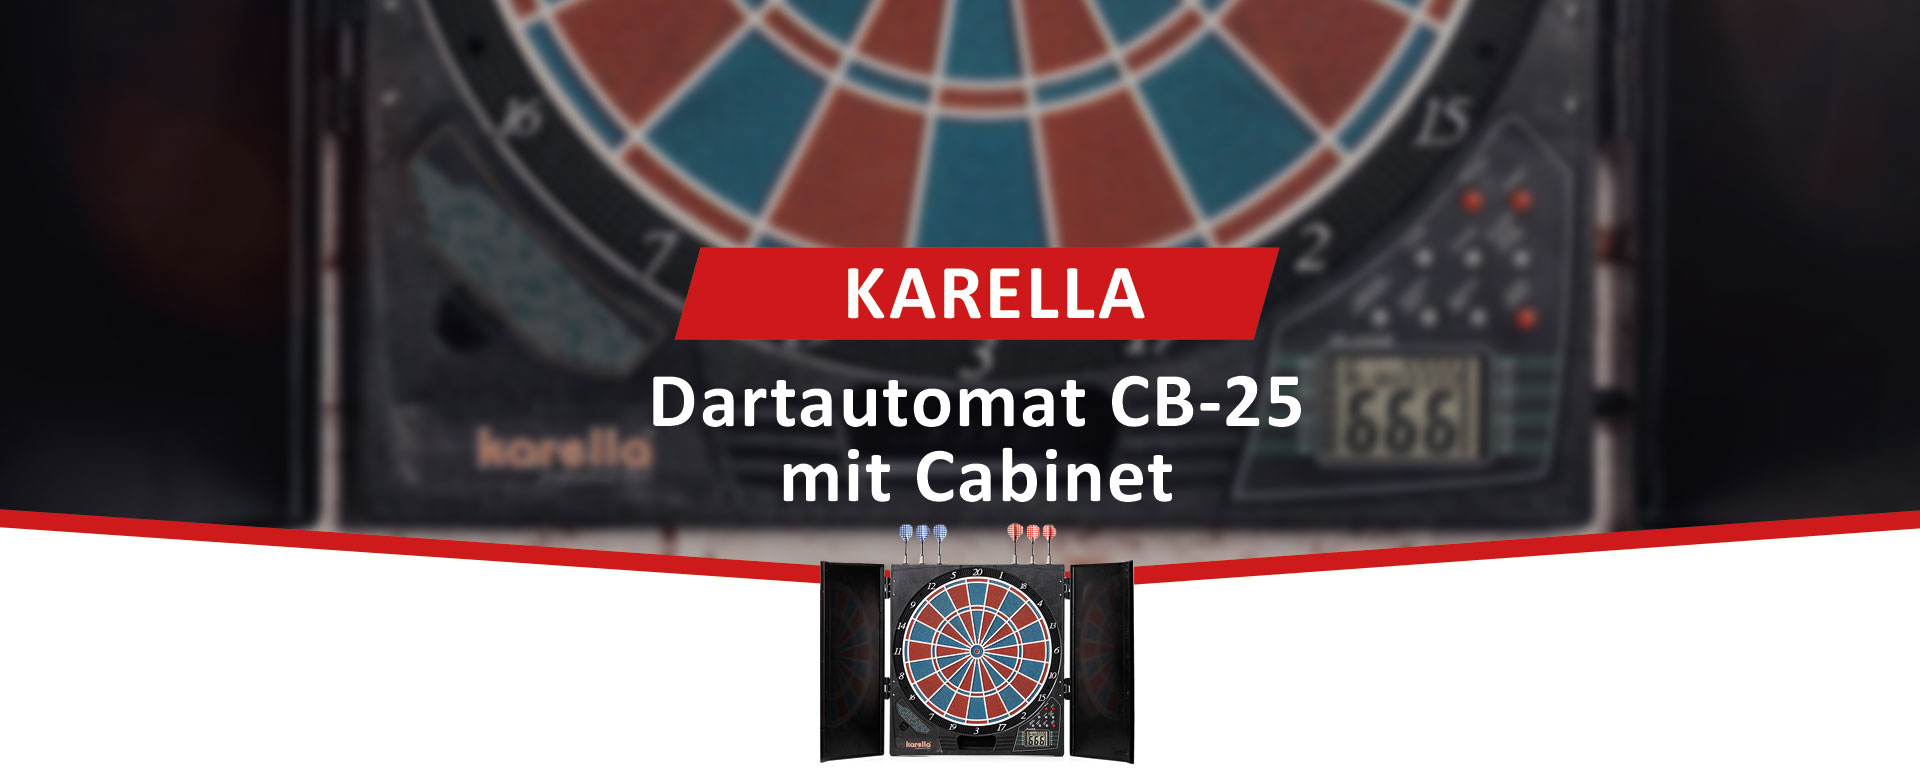 Softdarts 2 Cabinet Satz CB-25 KARELLA Dartautomat + inkl.